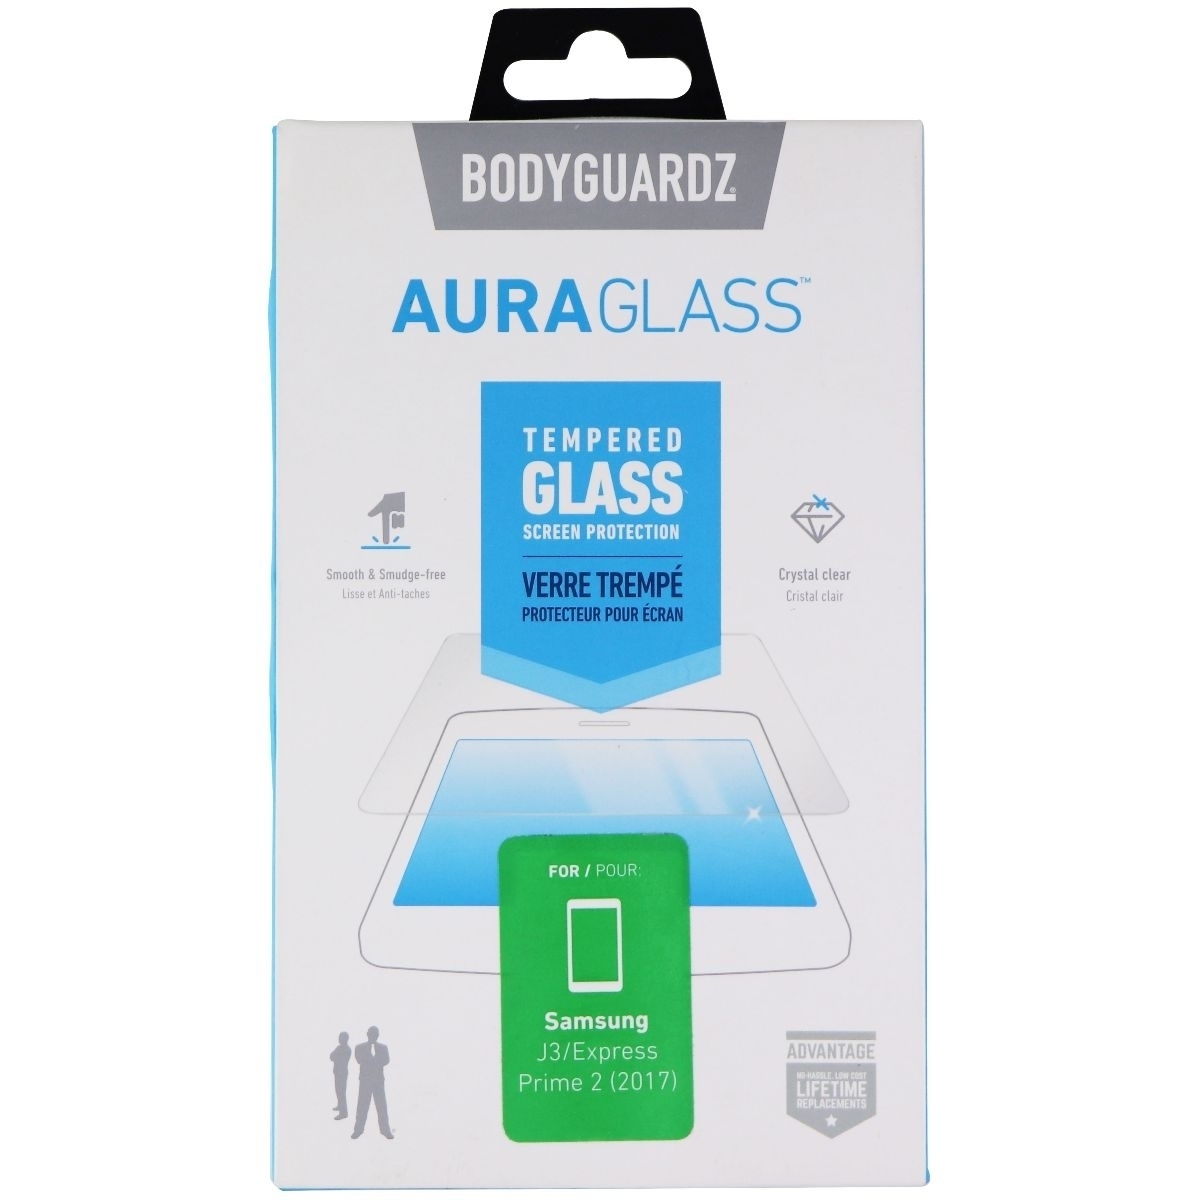 BodyGuardz AuraGlass Screen Protector For Samsung Galaxy J3/Express Prime 2